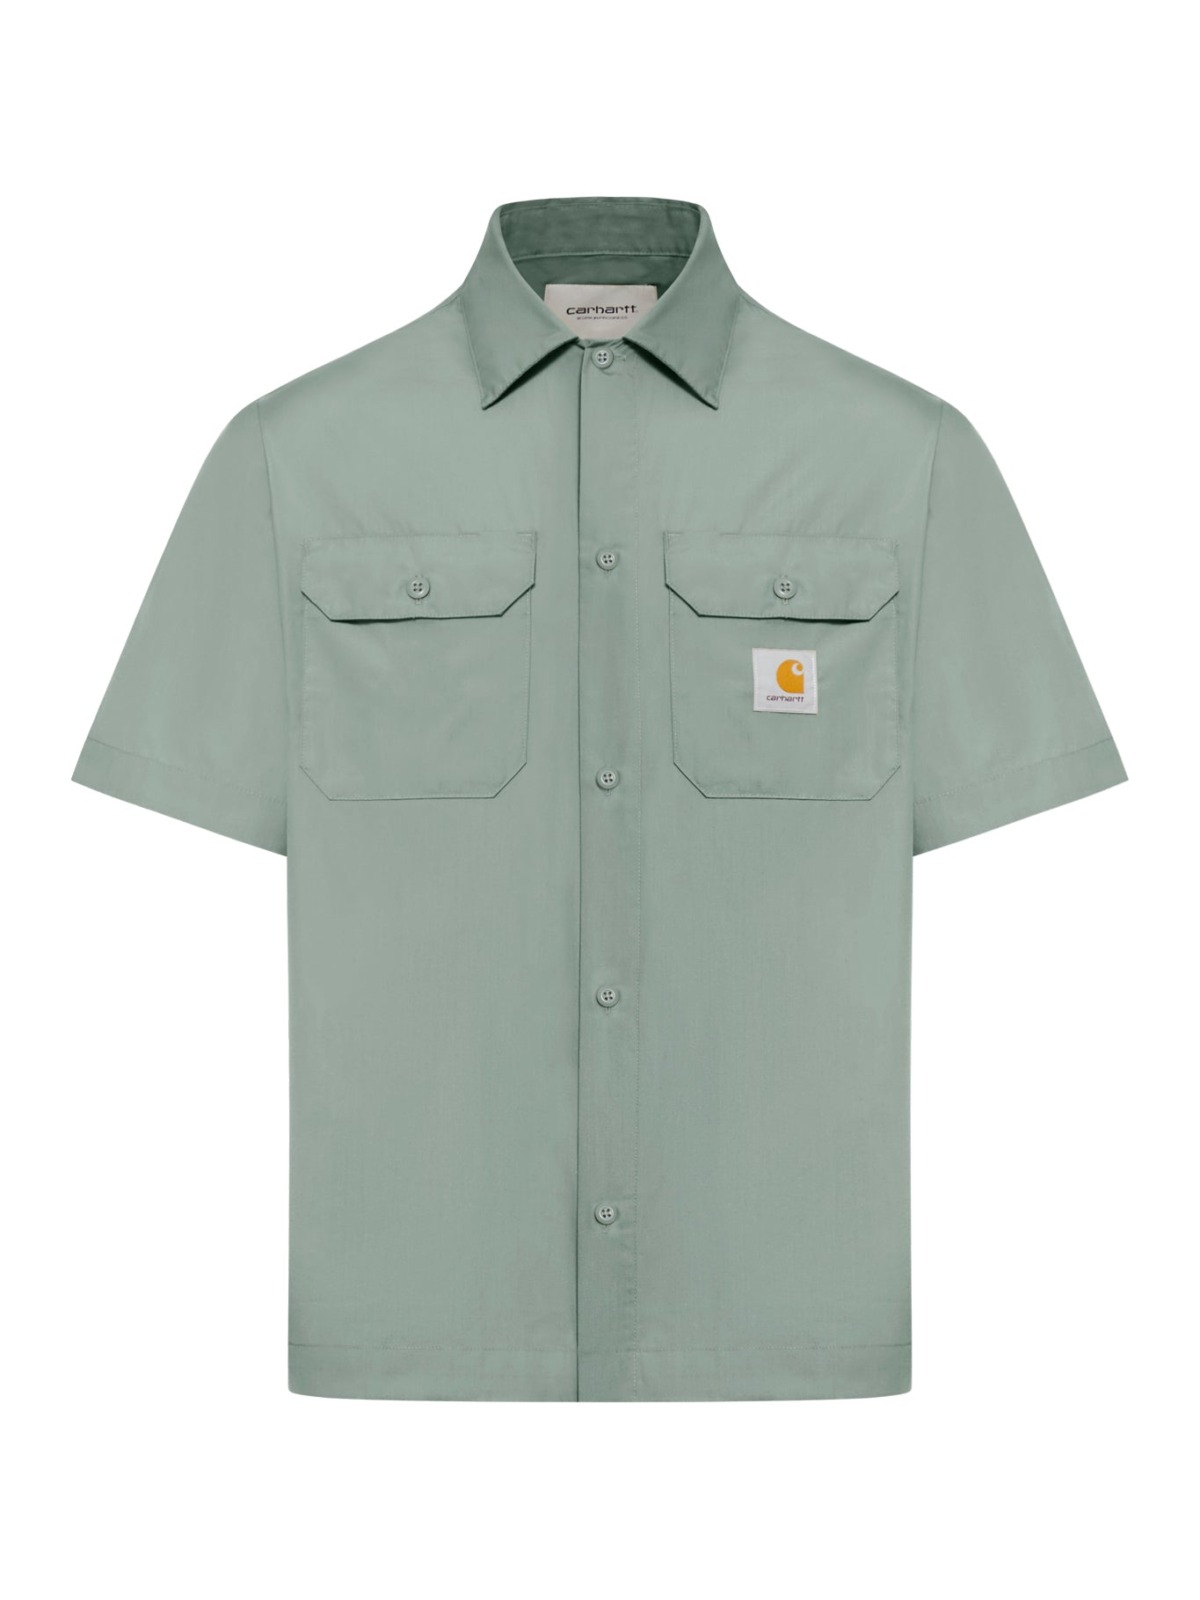 Carhartt Mens Short Sleeve Shirt Green by Suitnegozi GOOFASH